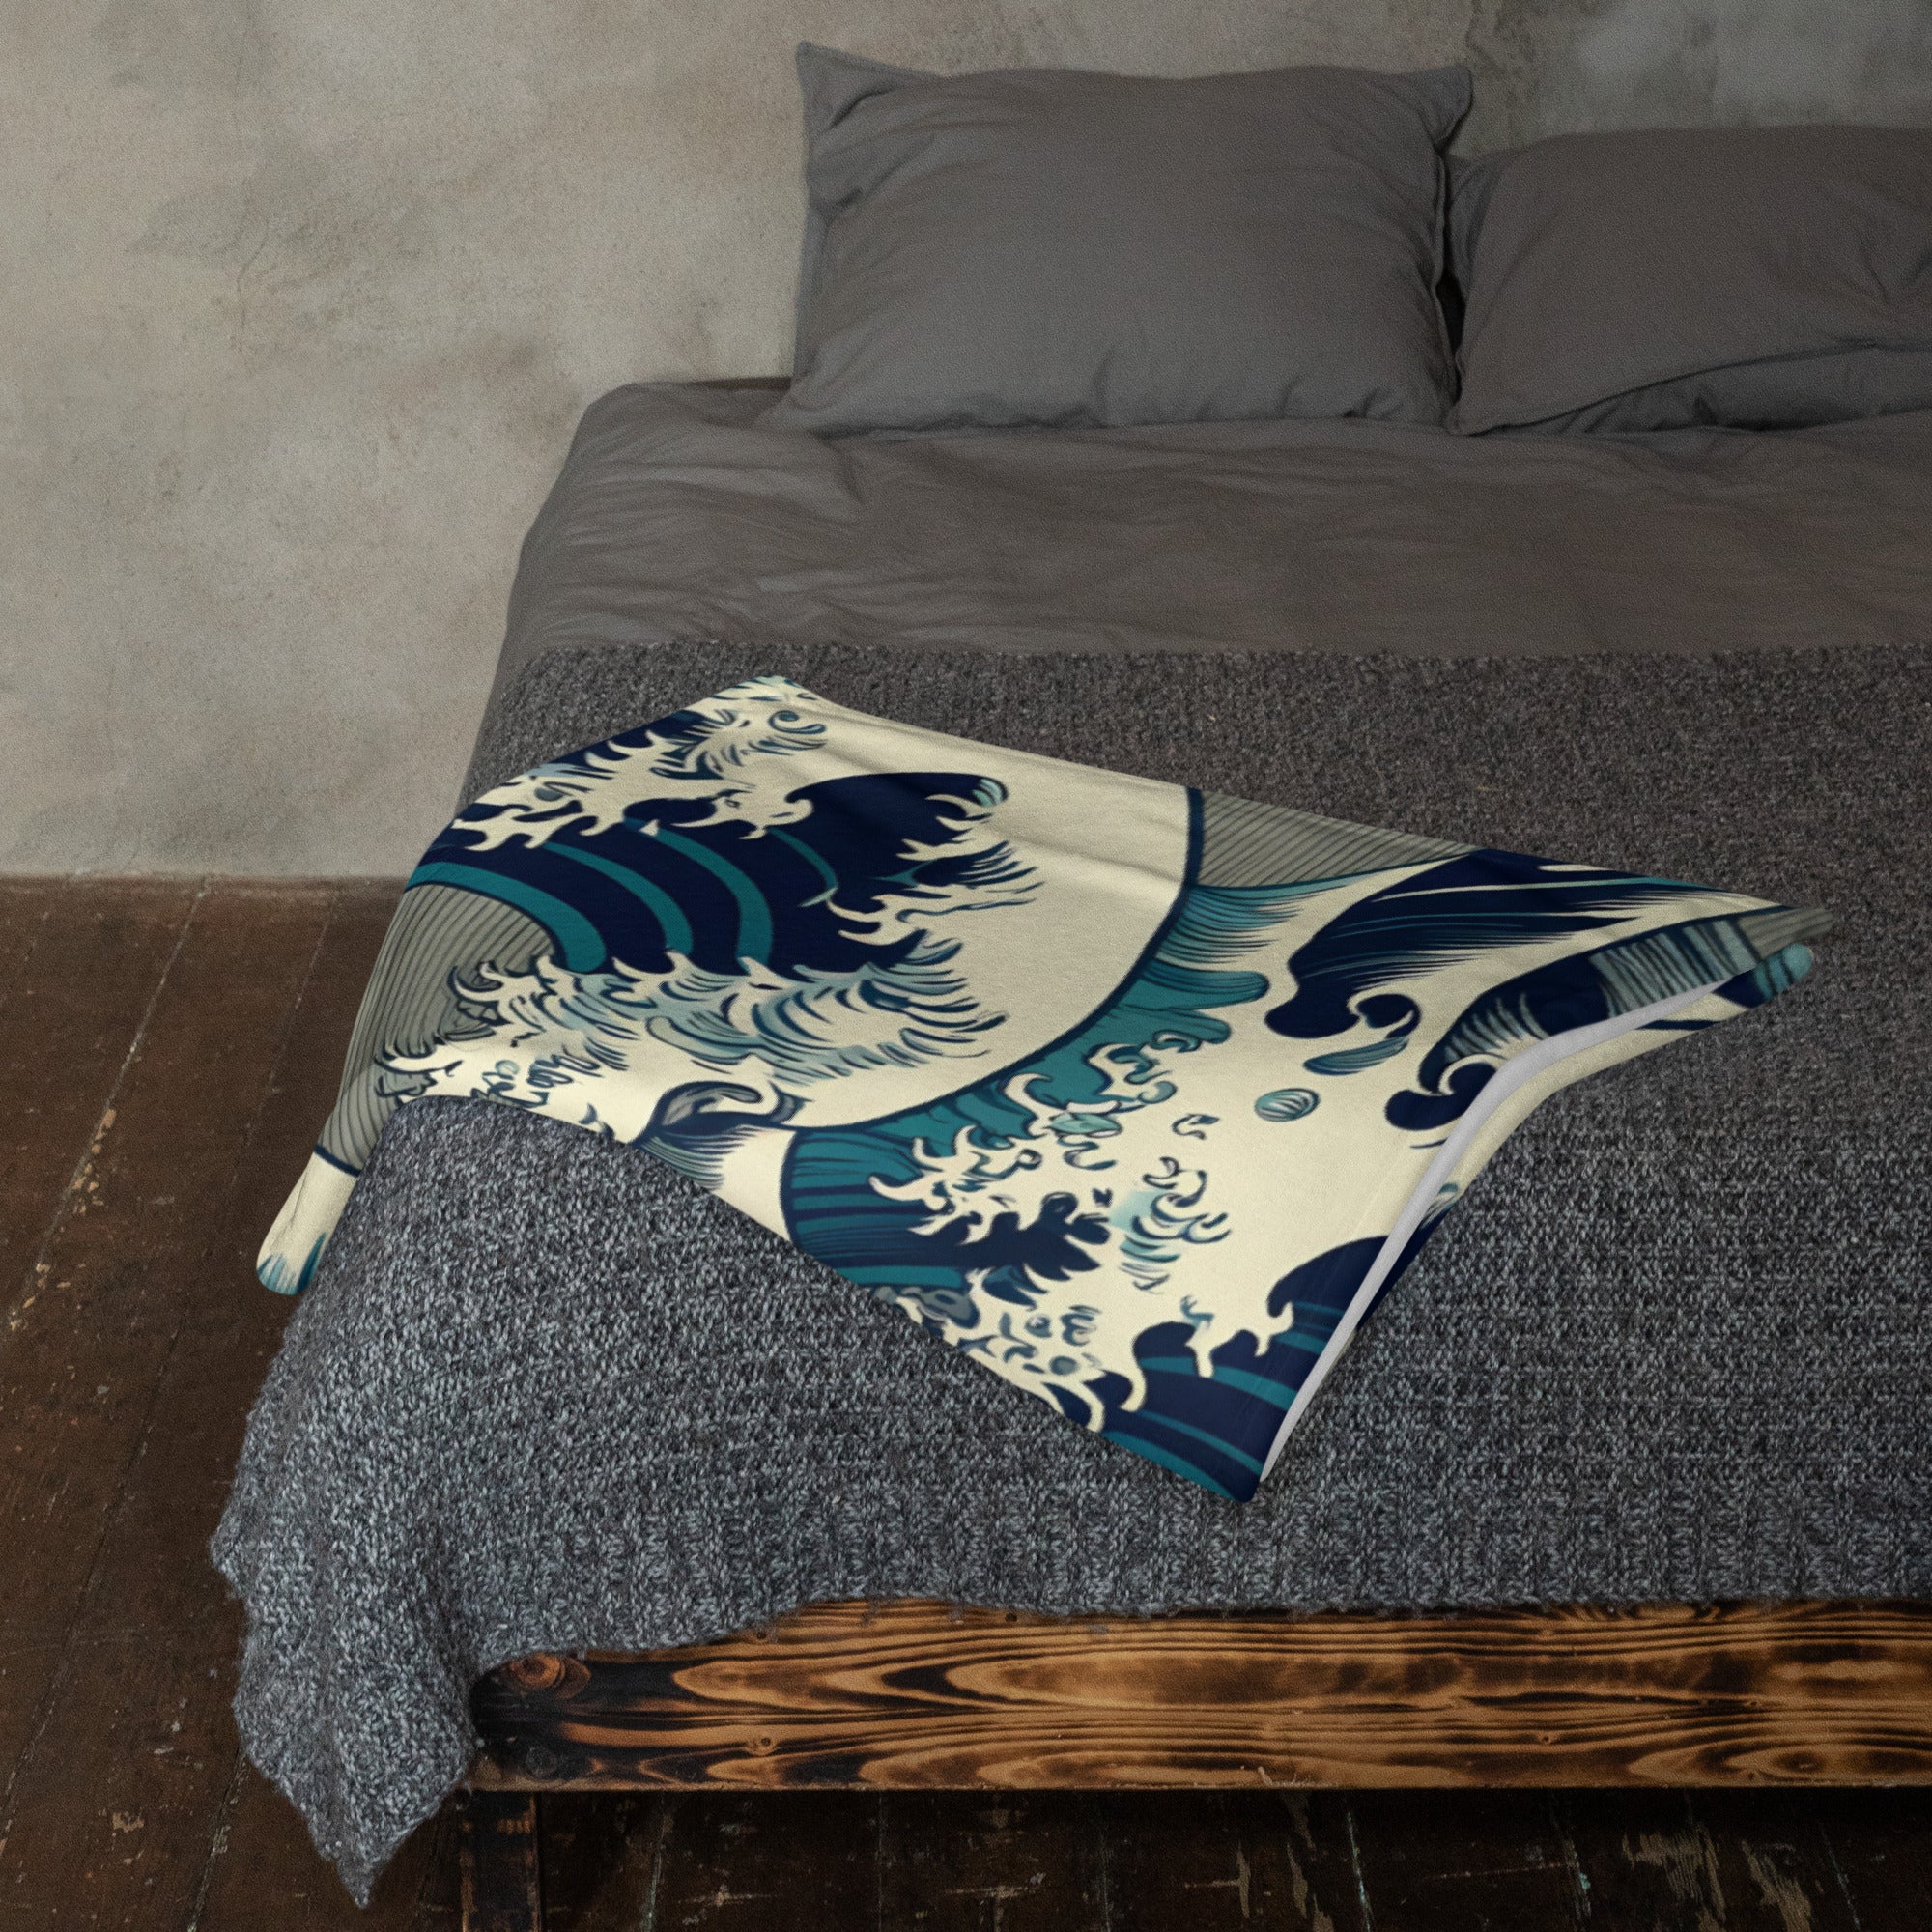 Hokusai 'The Great Wave off Kanagawa' Famous Painting Throw Blanket | Premium Art Throw